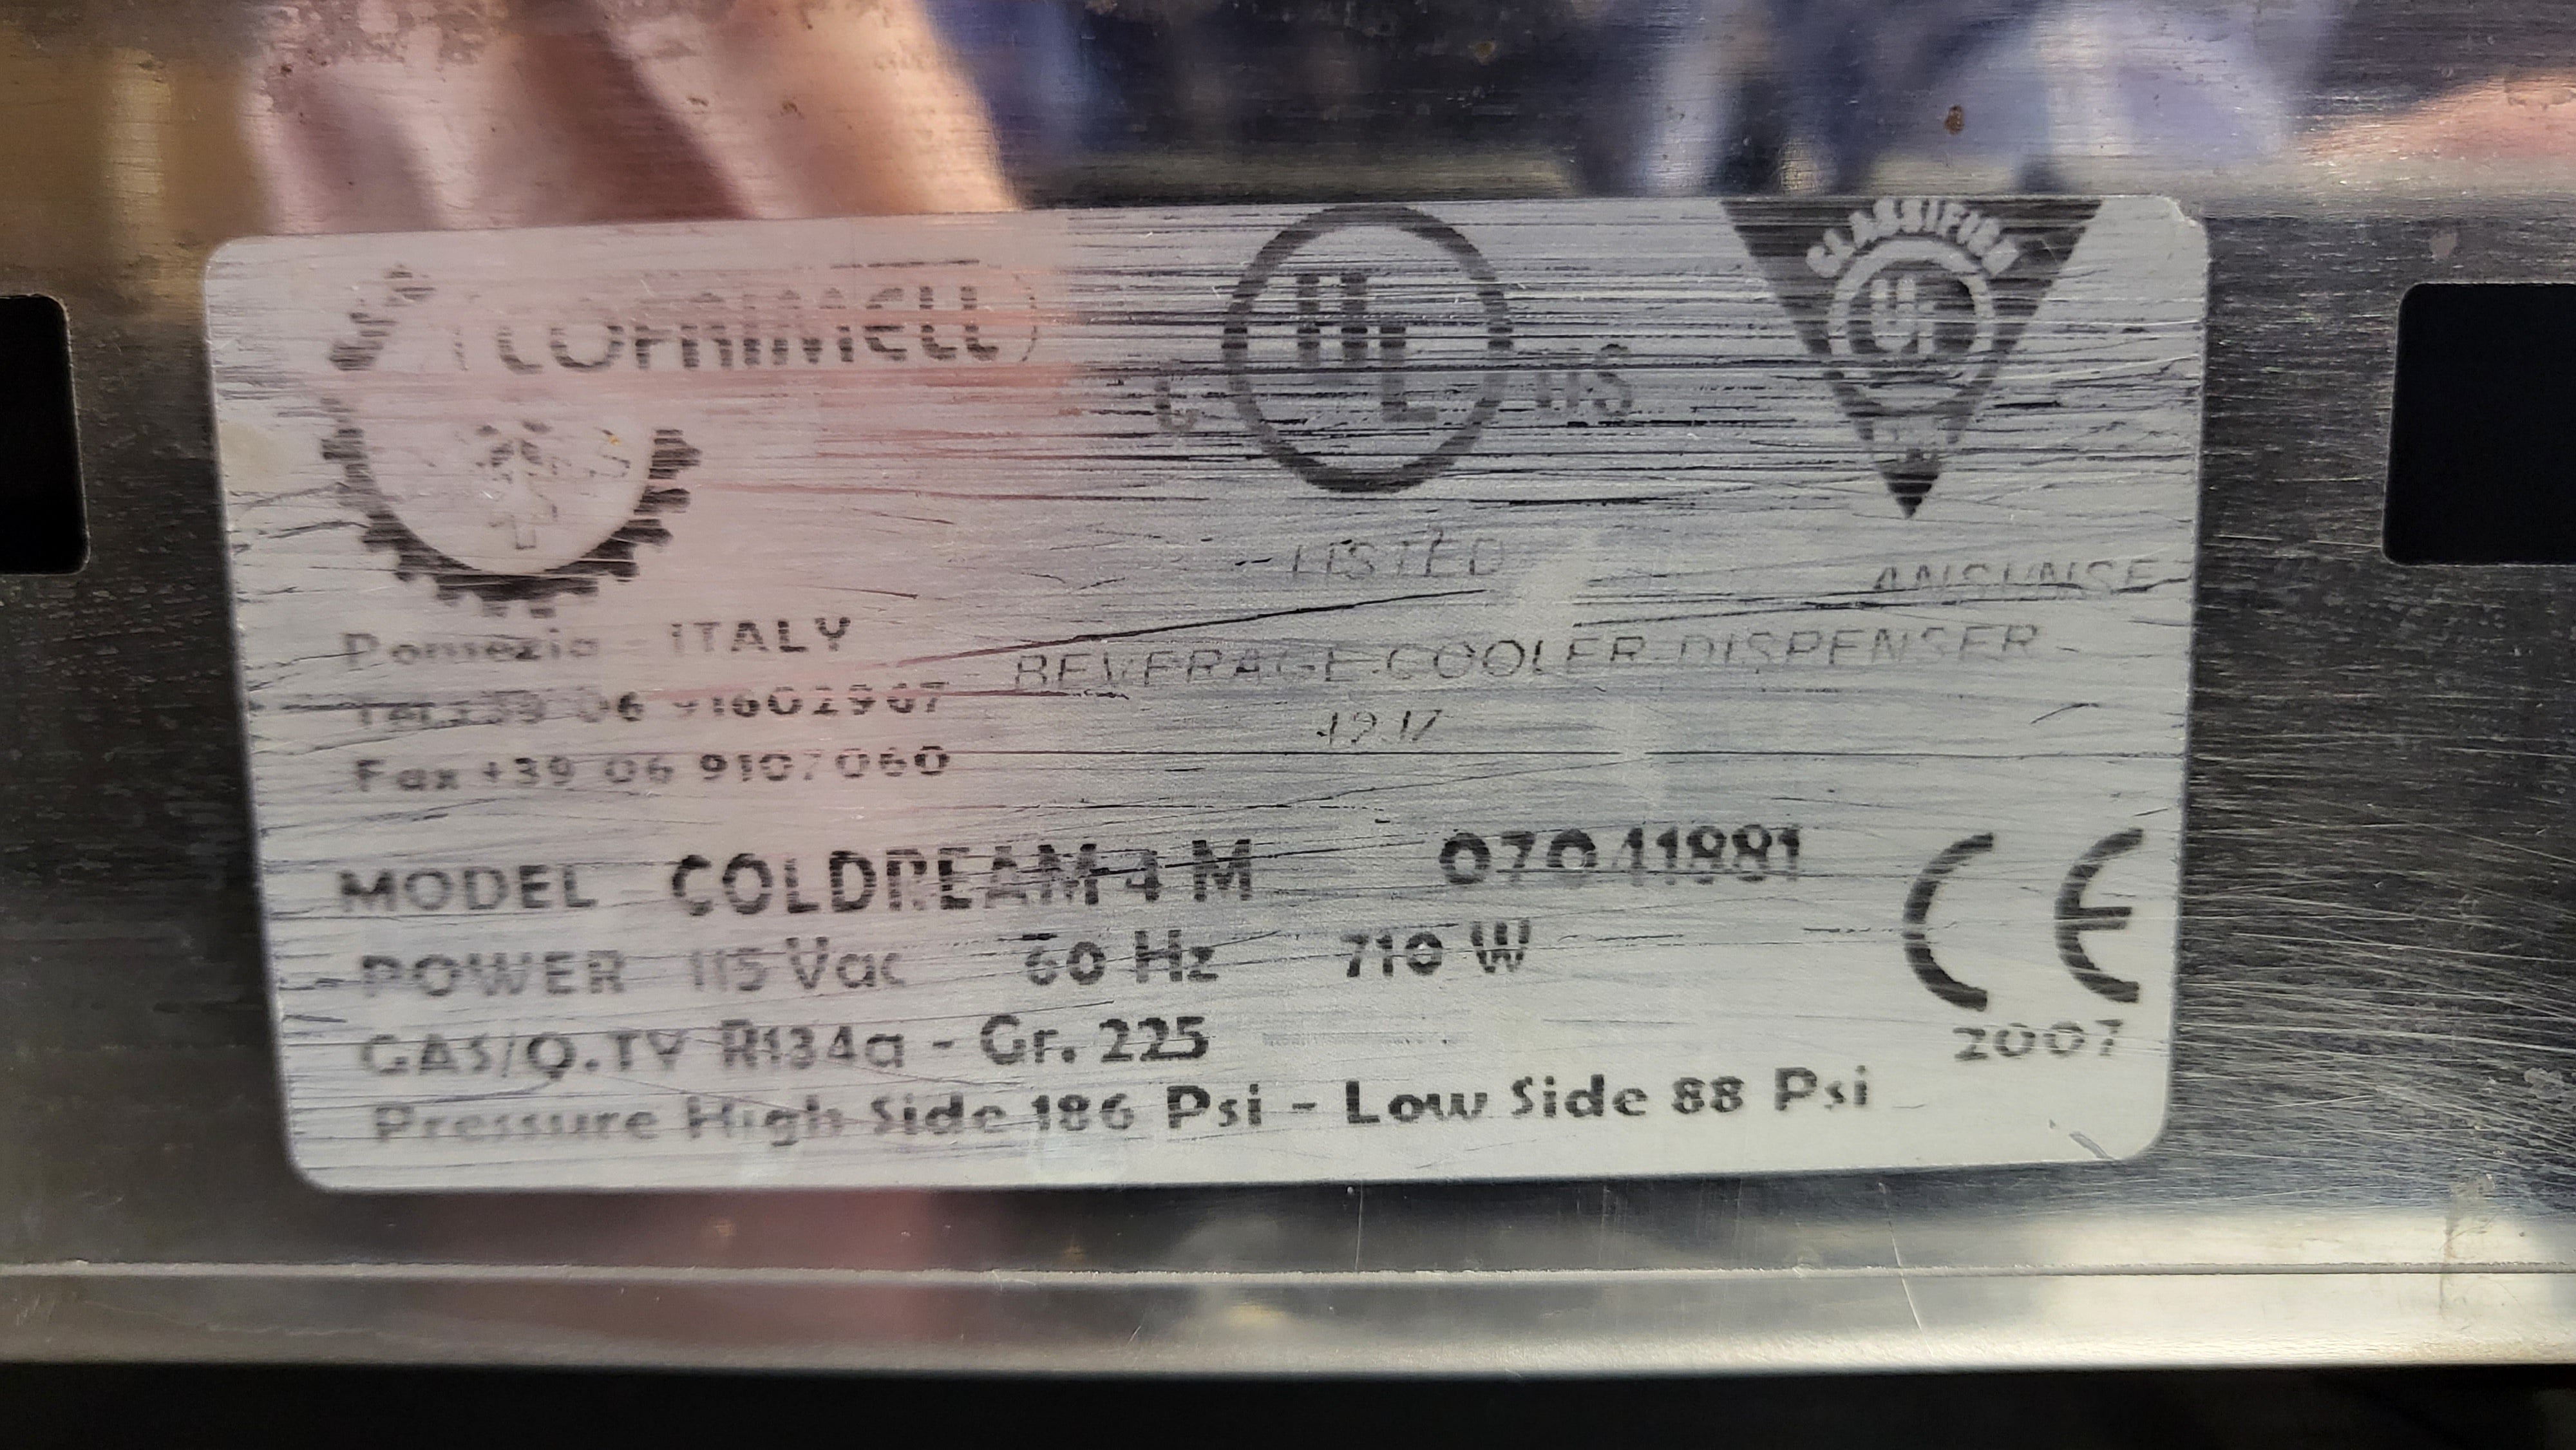 Thumbnail - Cofrimell Coldream 4M Juice Dispenser